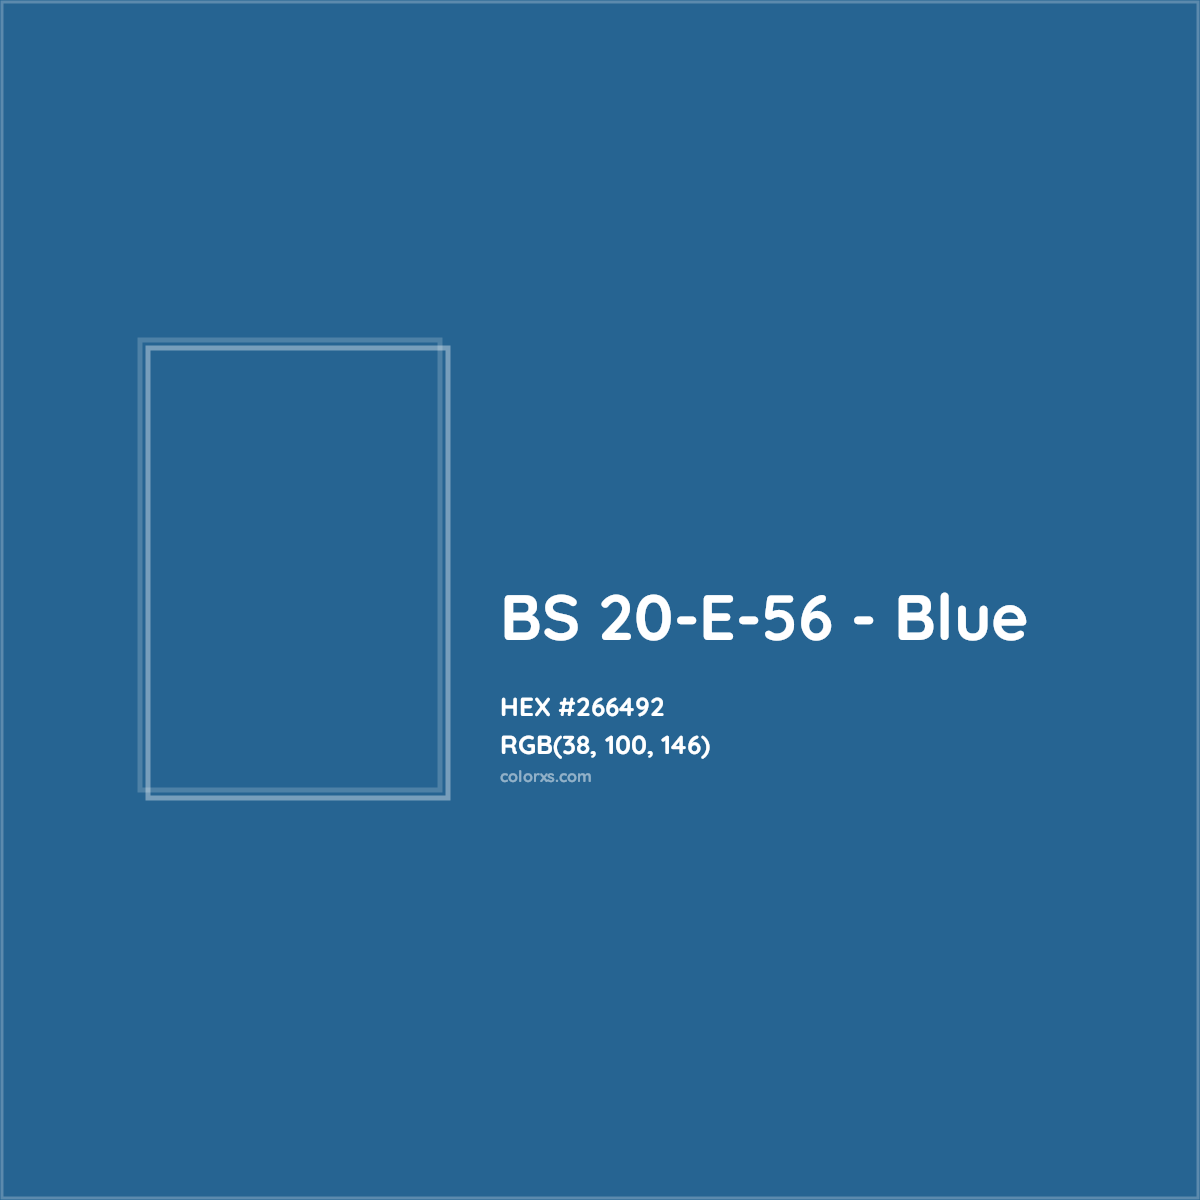 HEX #266492 BS 20-E-56 - Blue CMS British Standard 4800 - Color Code